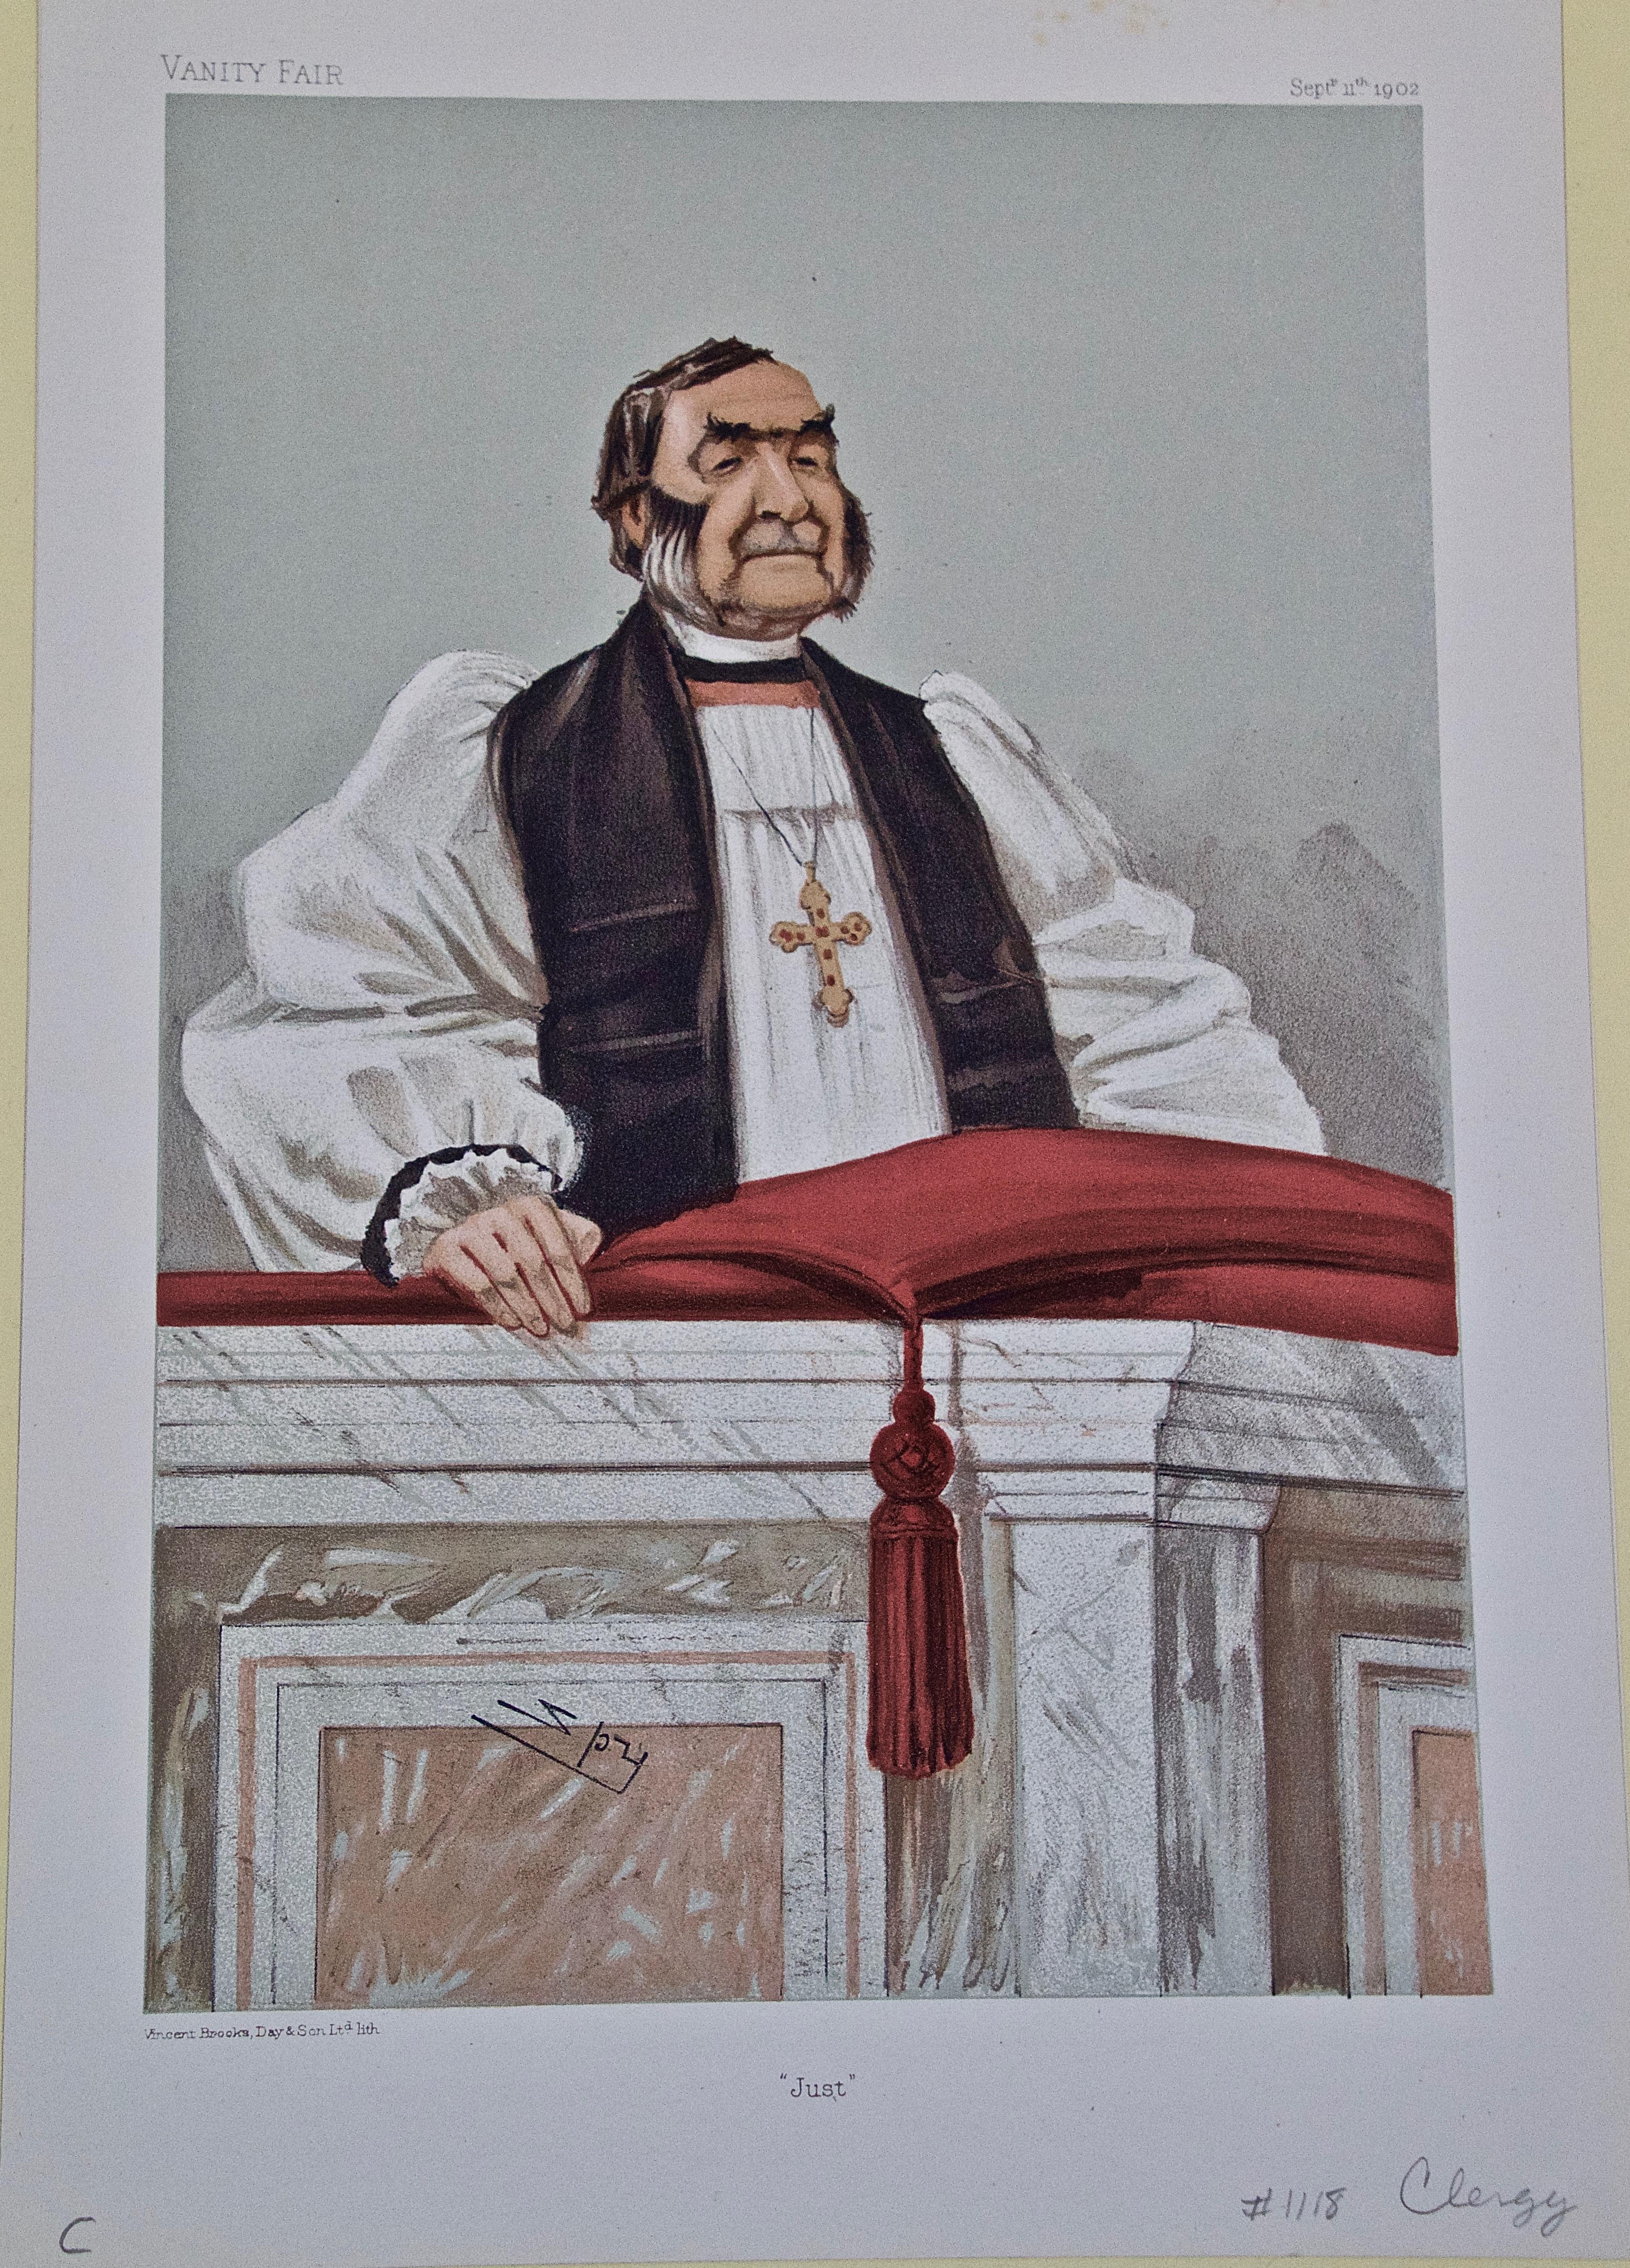 Sir Leslie Ward Portrait Print - Vanity Fair Caricature, Frederick Temple, Archbishop of Canterbury "Just" by Spy